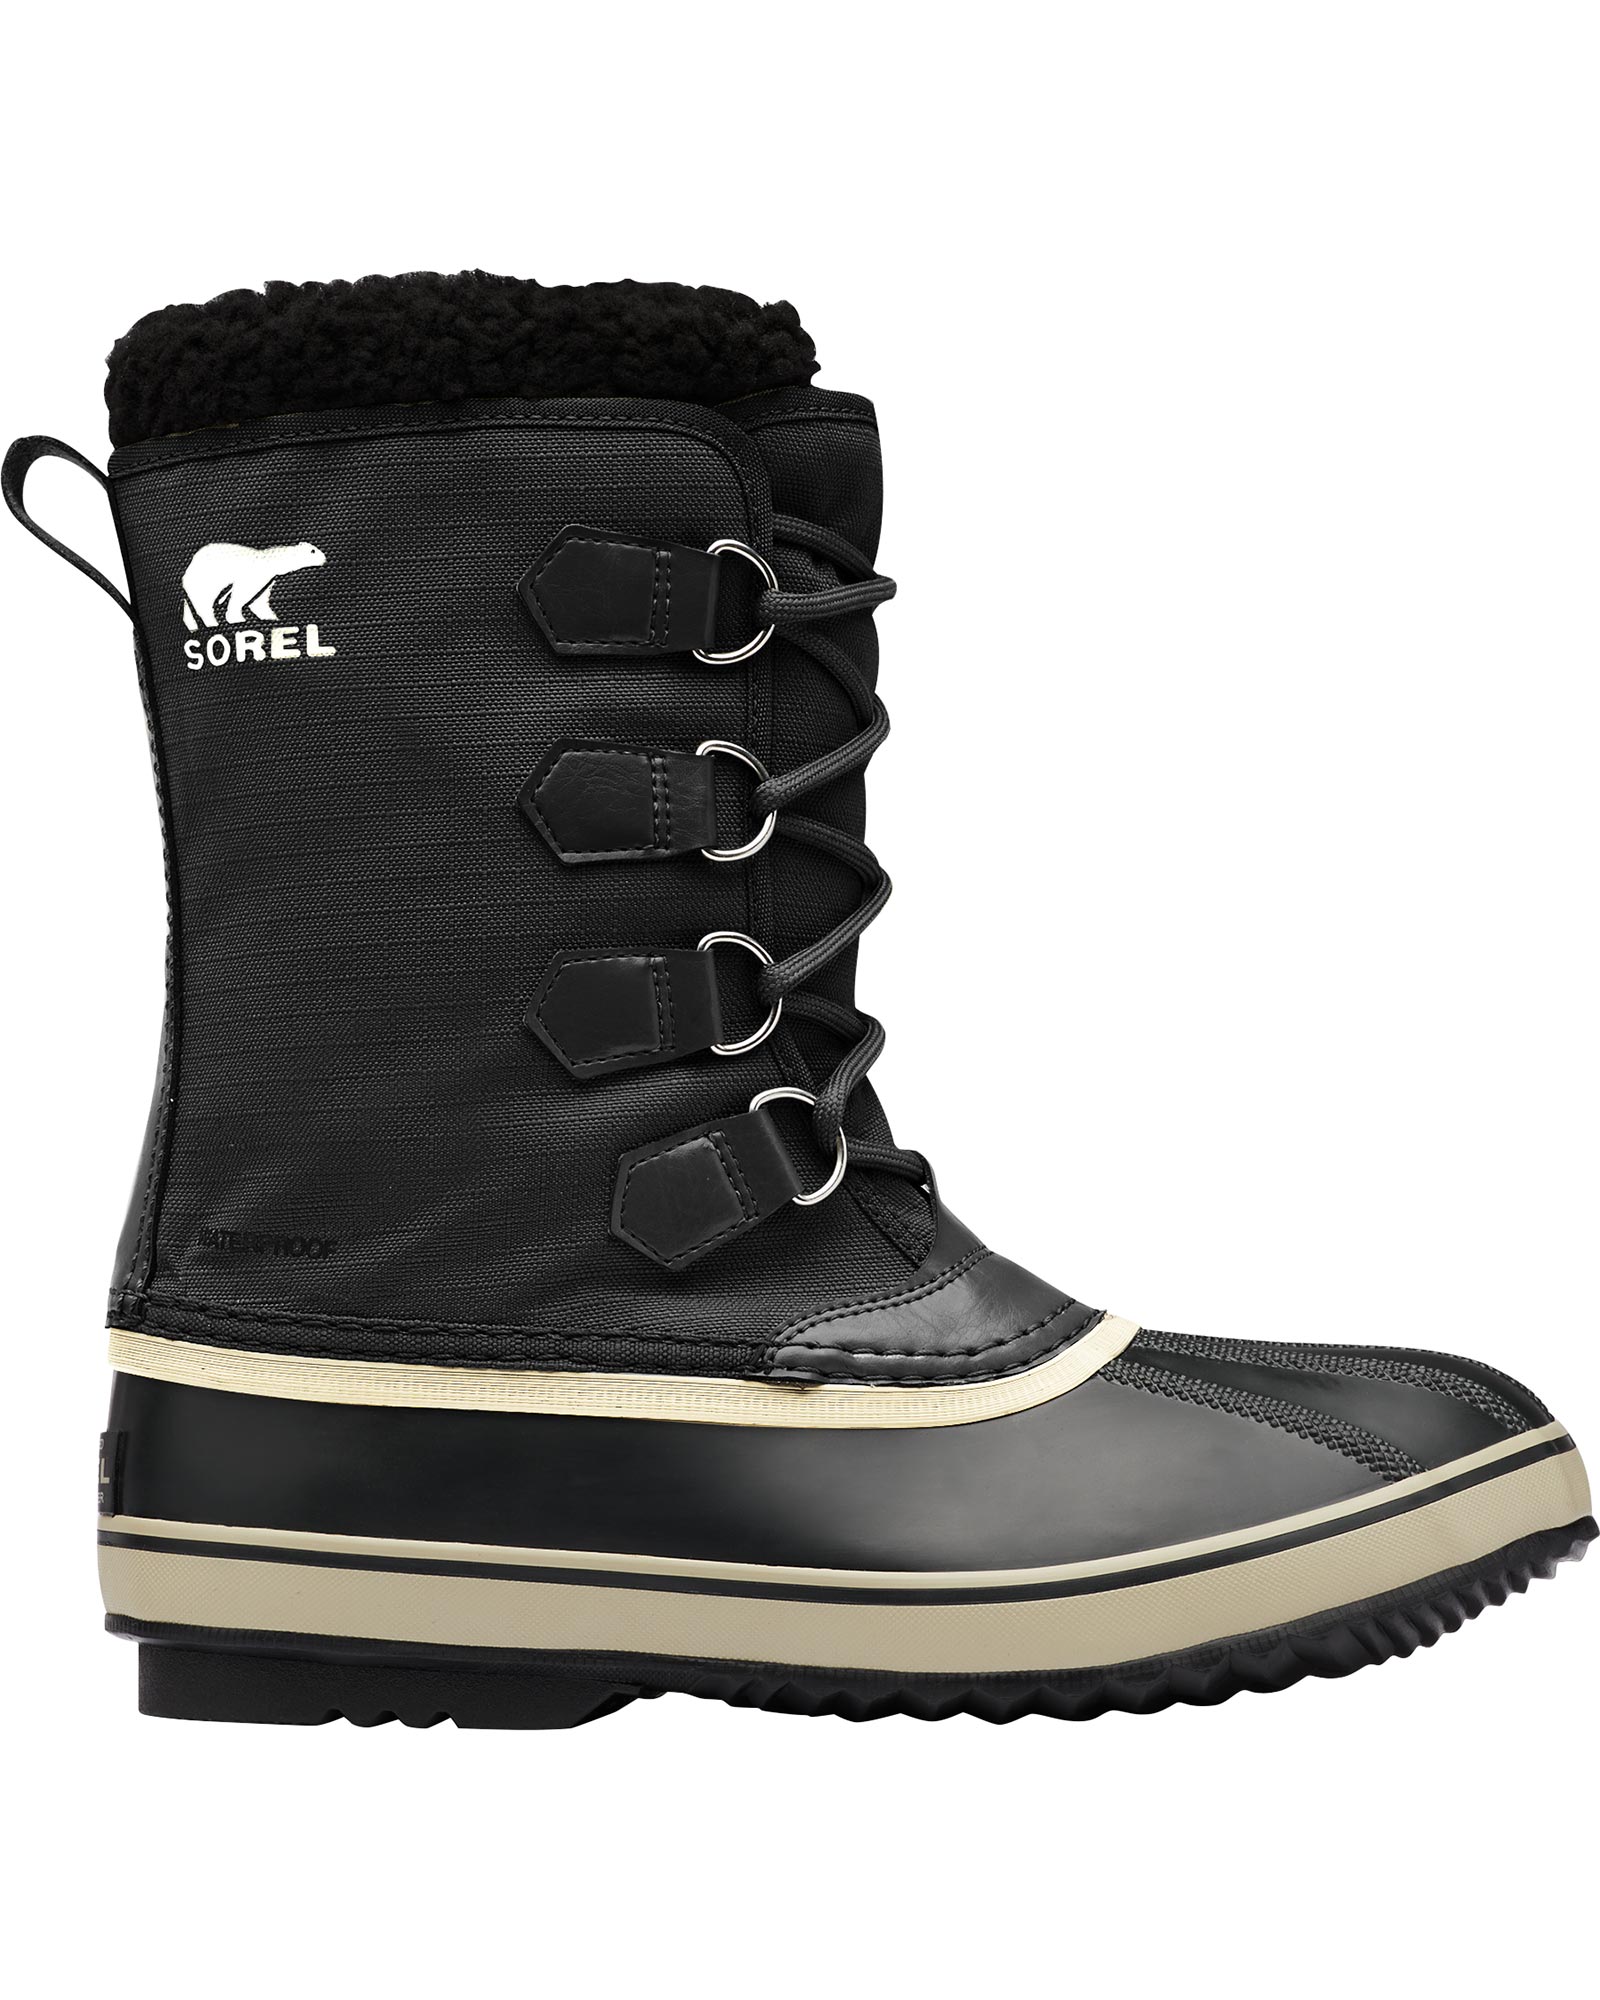 Sorel 1964 Pac Nylon Men’s Snow Boots - black UK 12